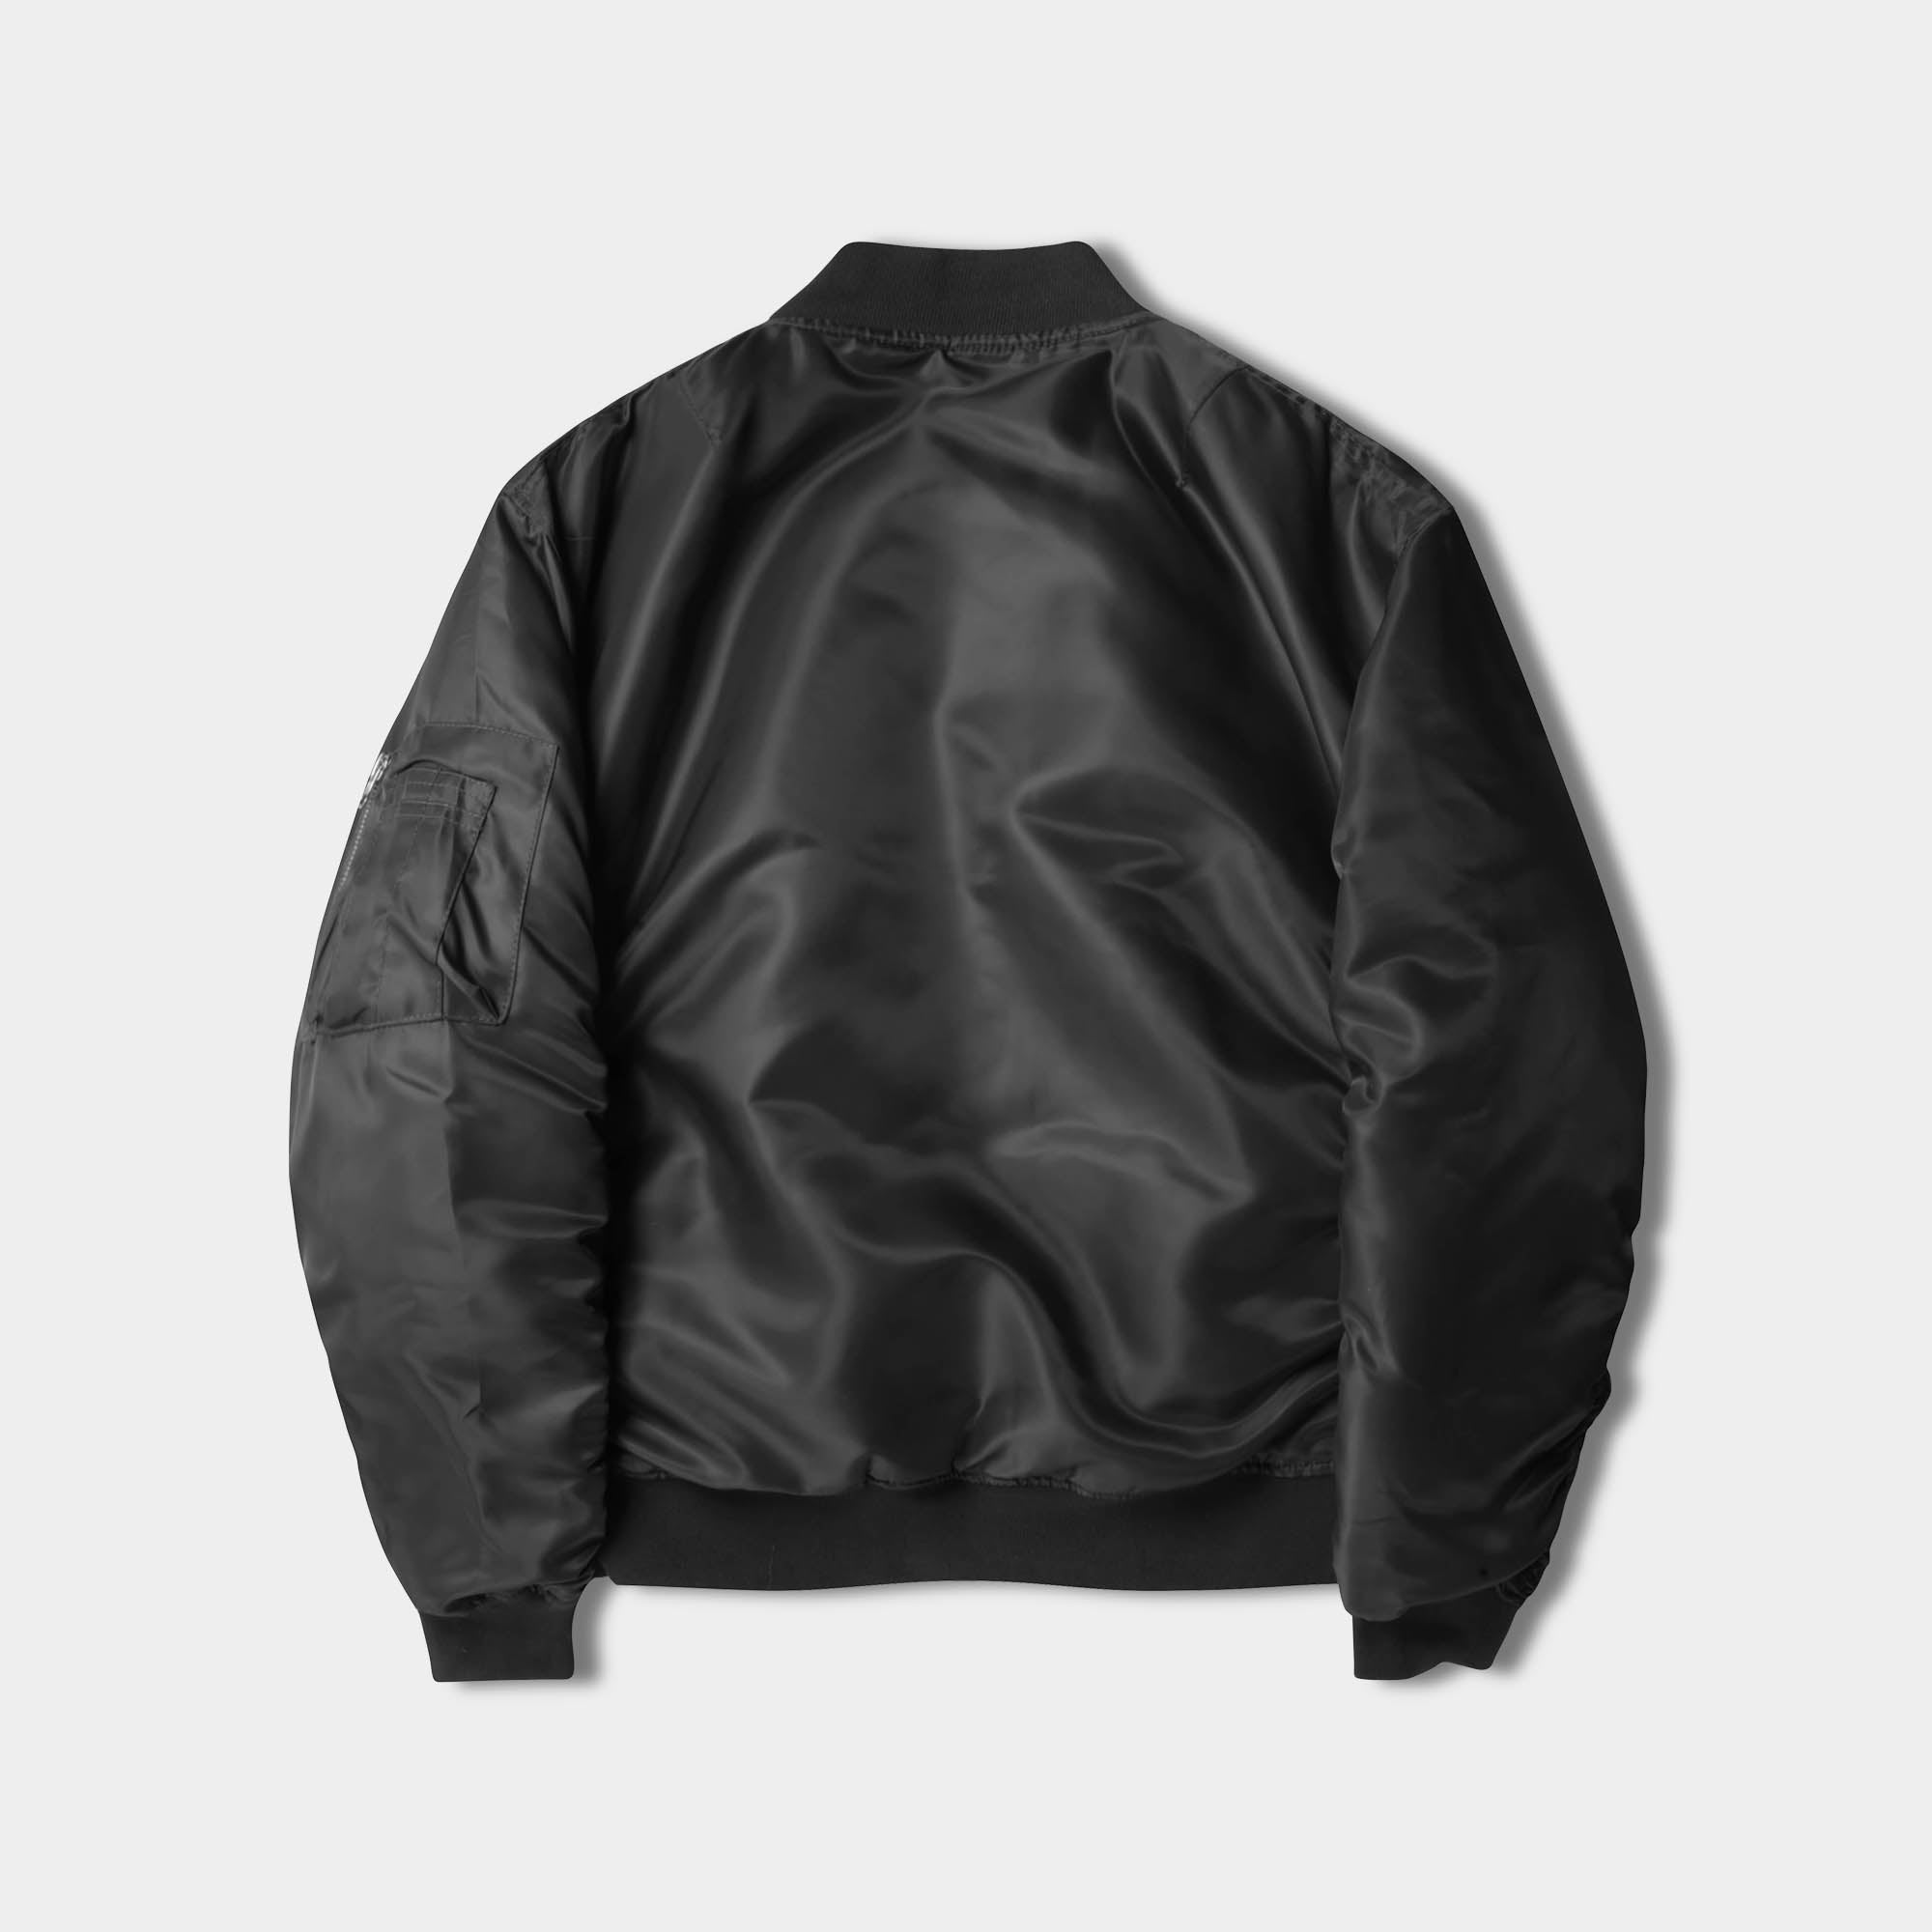 mens bomber jacket_black bomber jacket mens_aviator jacket mens_superdry bomber jacket_mens bomber jacket sale_best bomber jackets_Black